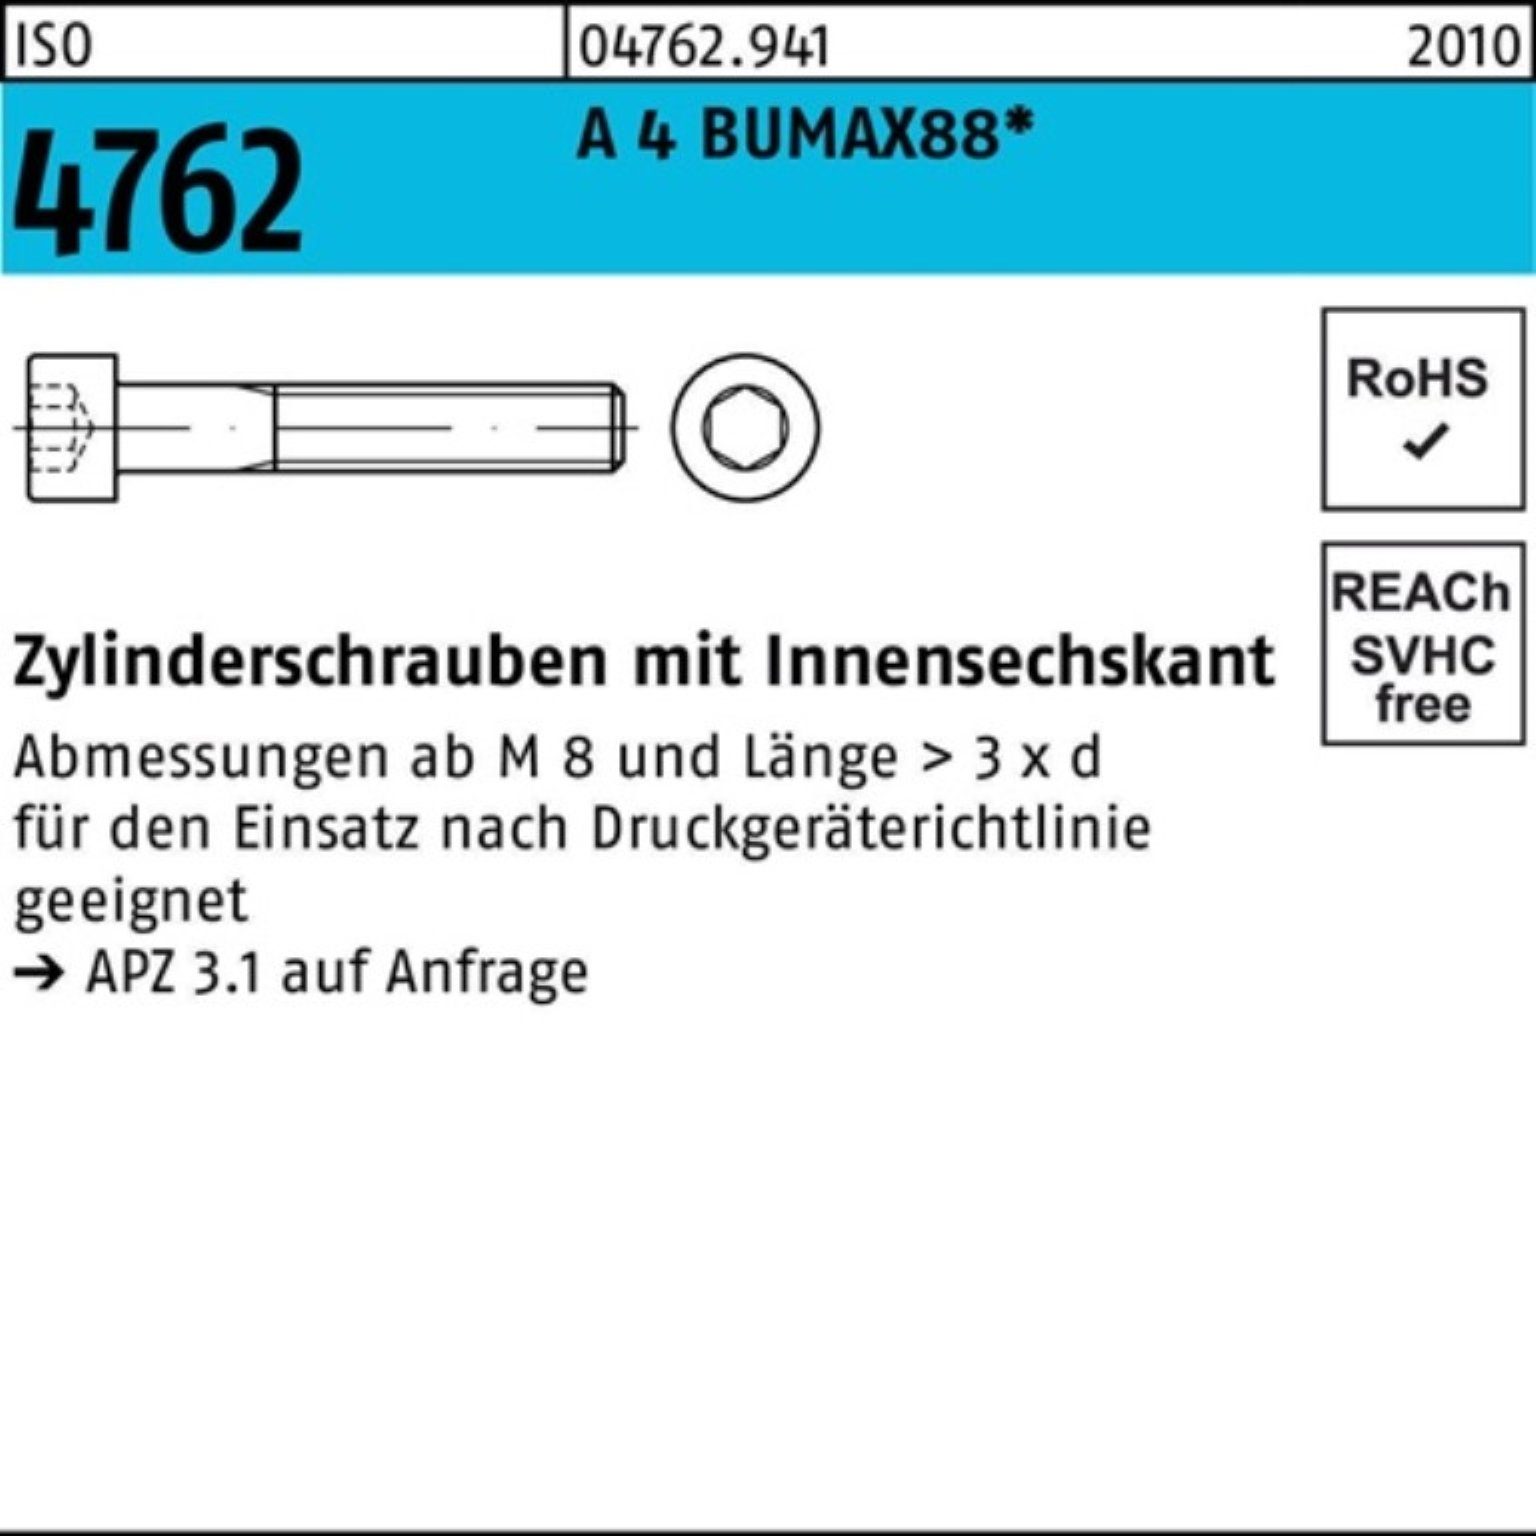 Bufab Zylinderschraube 500er Pack Zylinderschraube ISO 4762 Innen-6kt M3x 16 A 4 BUMAX88 500